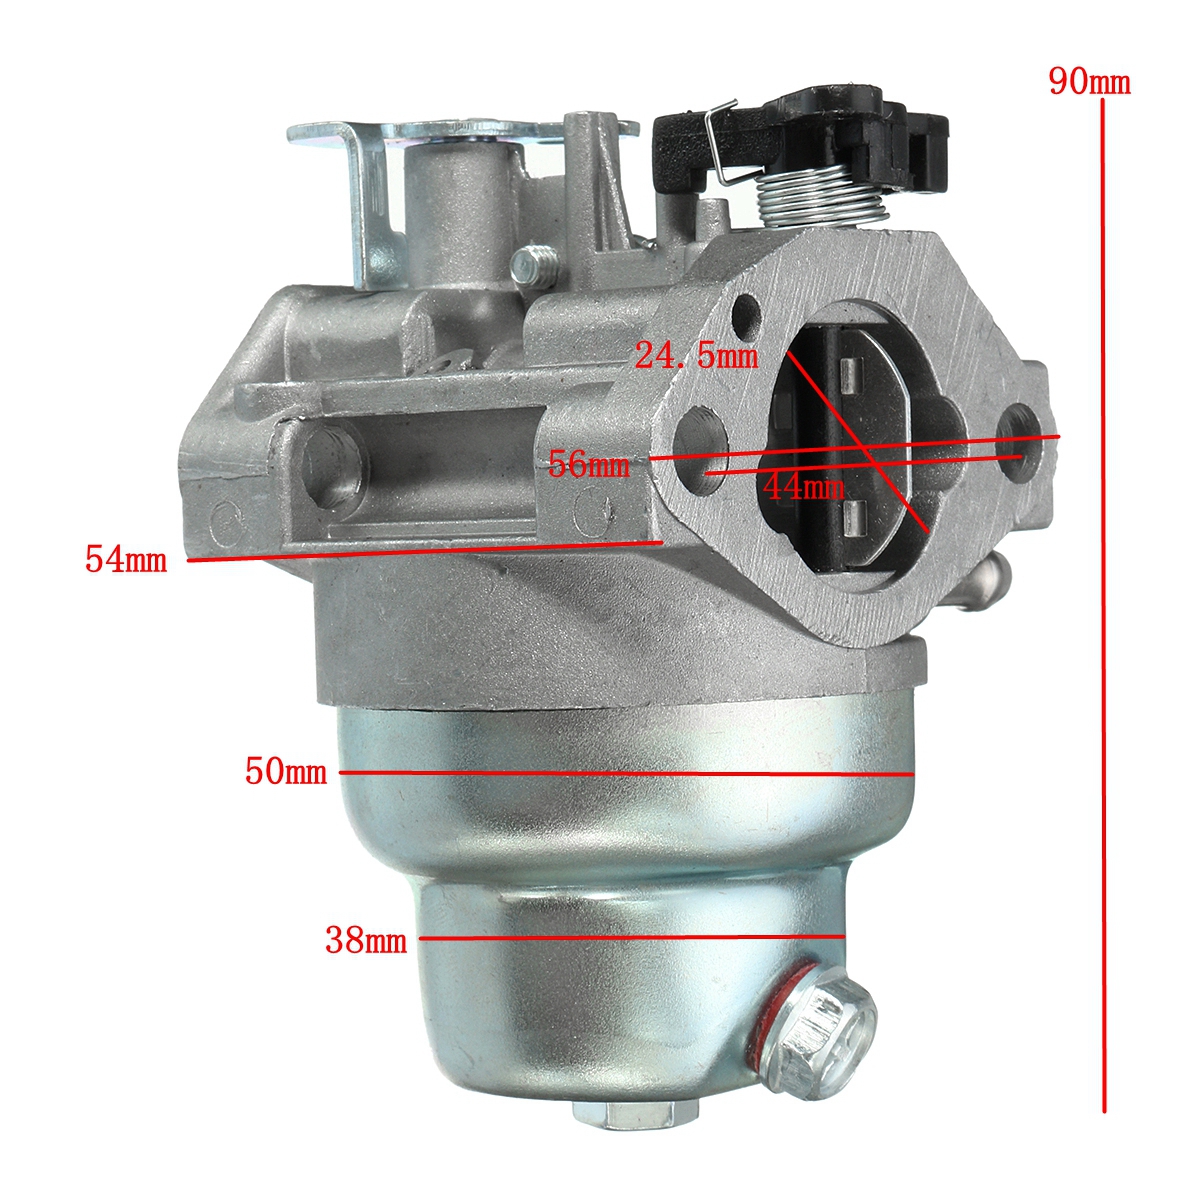 Carburetor-Intake-Kit-Air-Filter-Gaskets-with-Fuel-Line-for-Honda-GCV160-GCV135-Mower-Engine-HRU19R--1842970-12